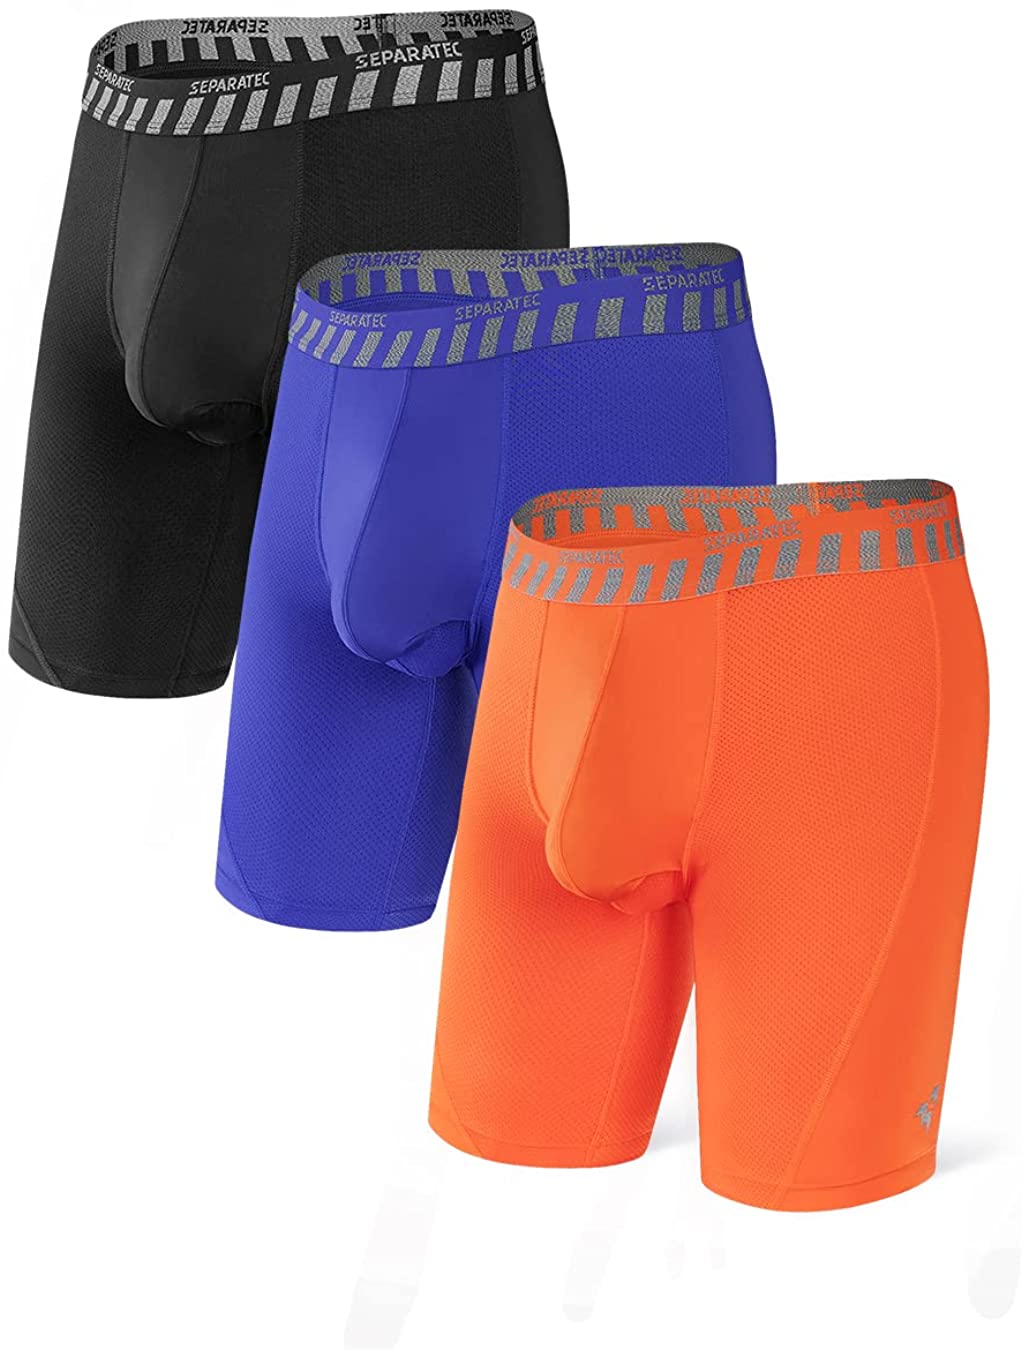 Separatec Men's Lightweight Sport Quick Dry Performance Dual Pouch Underwear  Long Leg Boxer - AliExpress